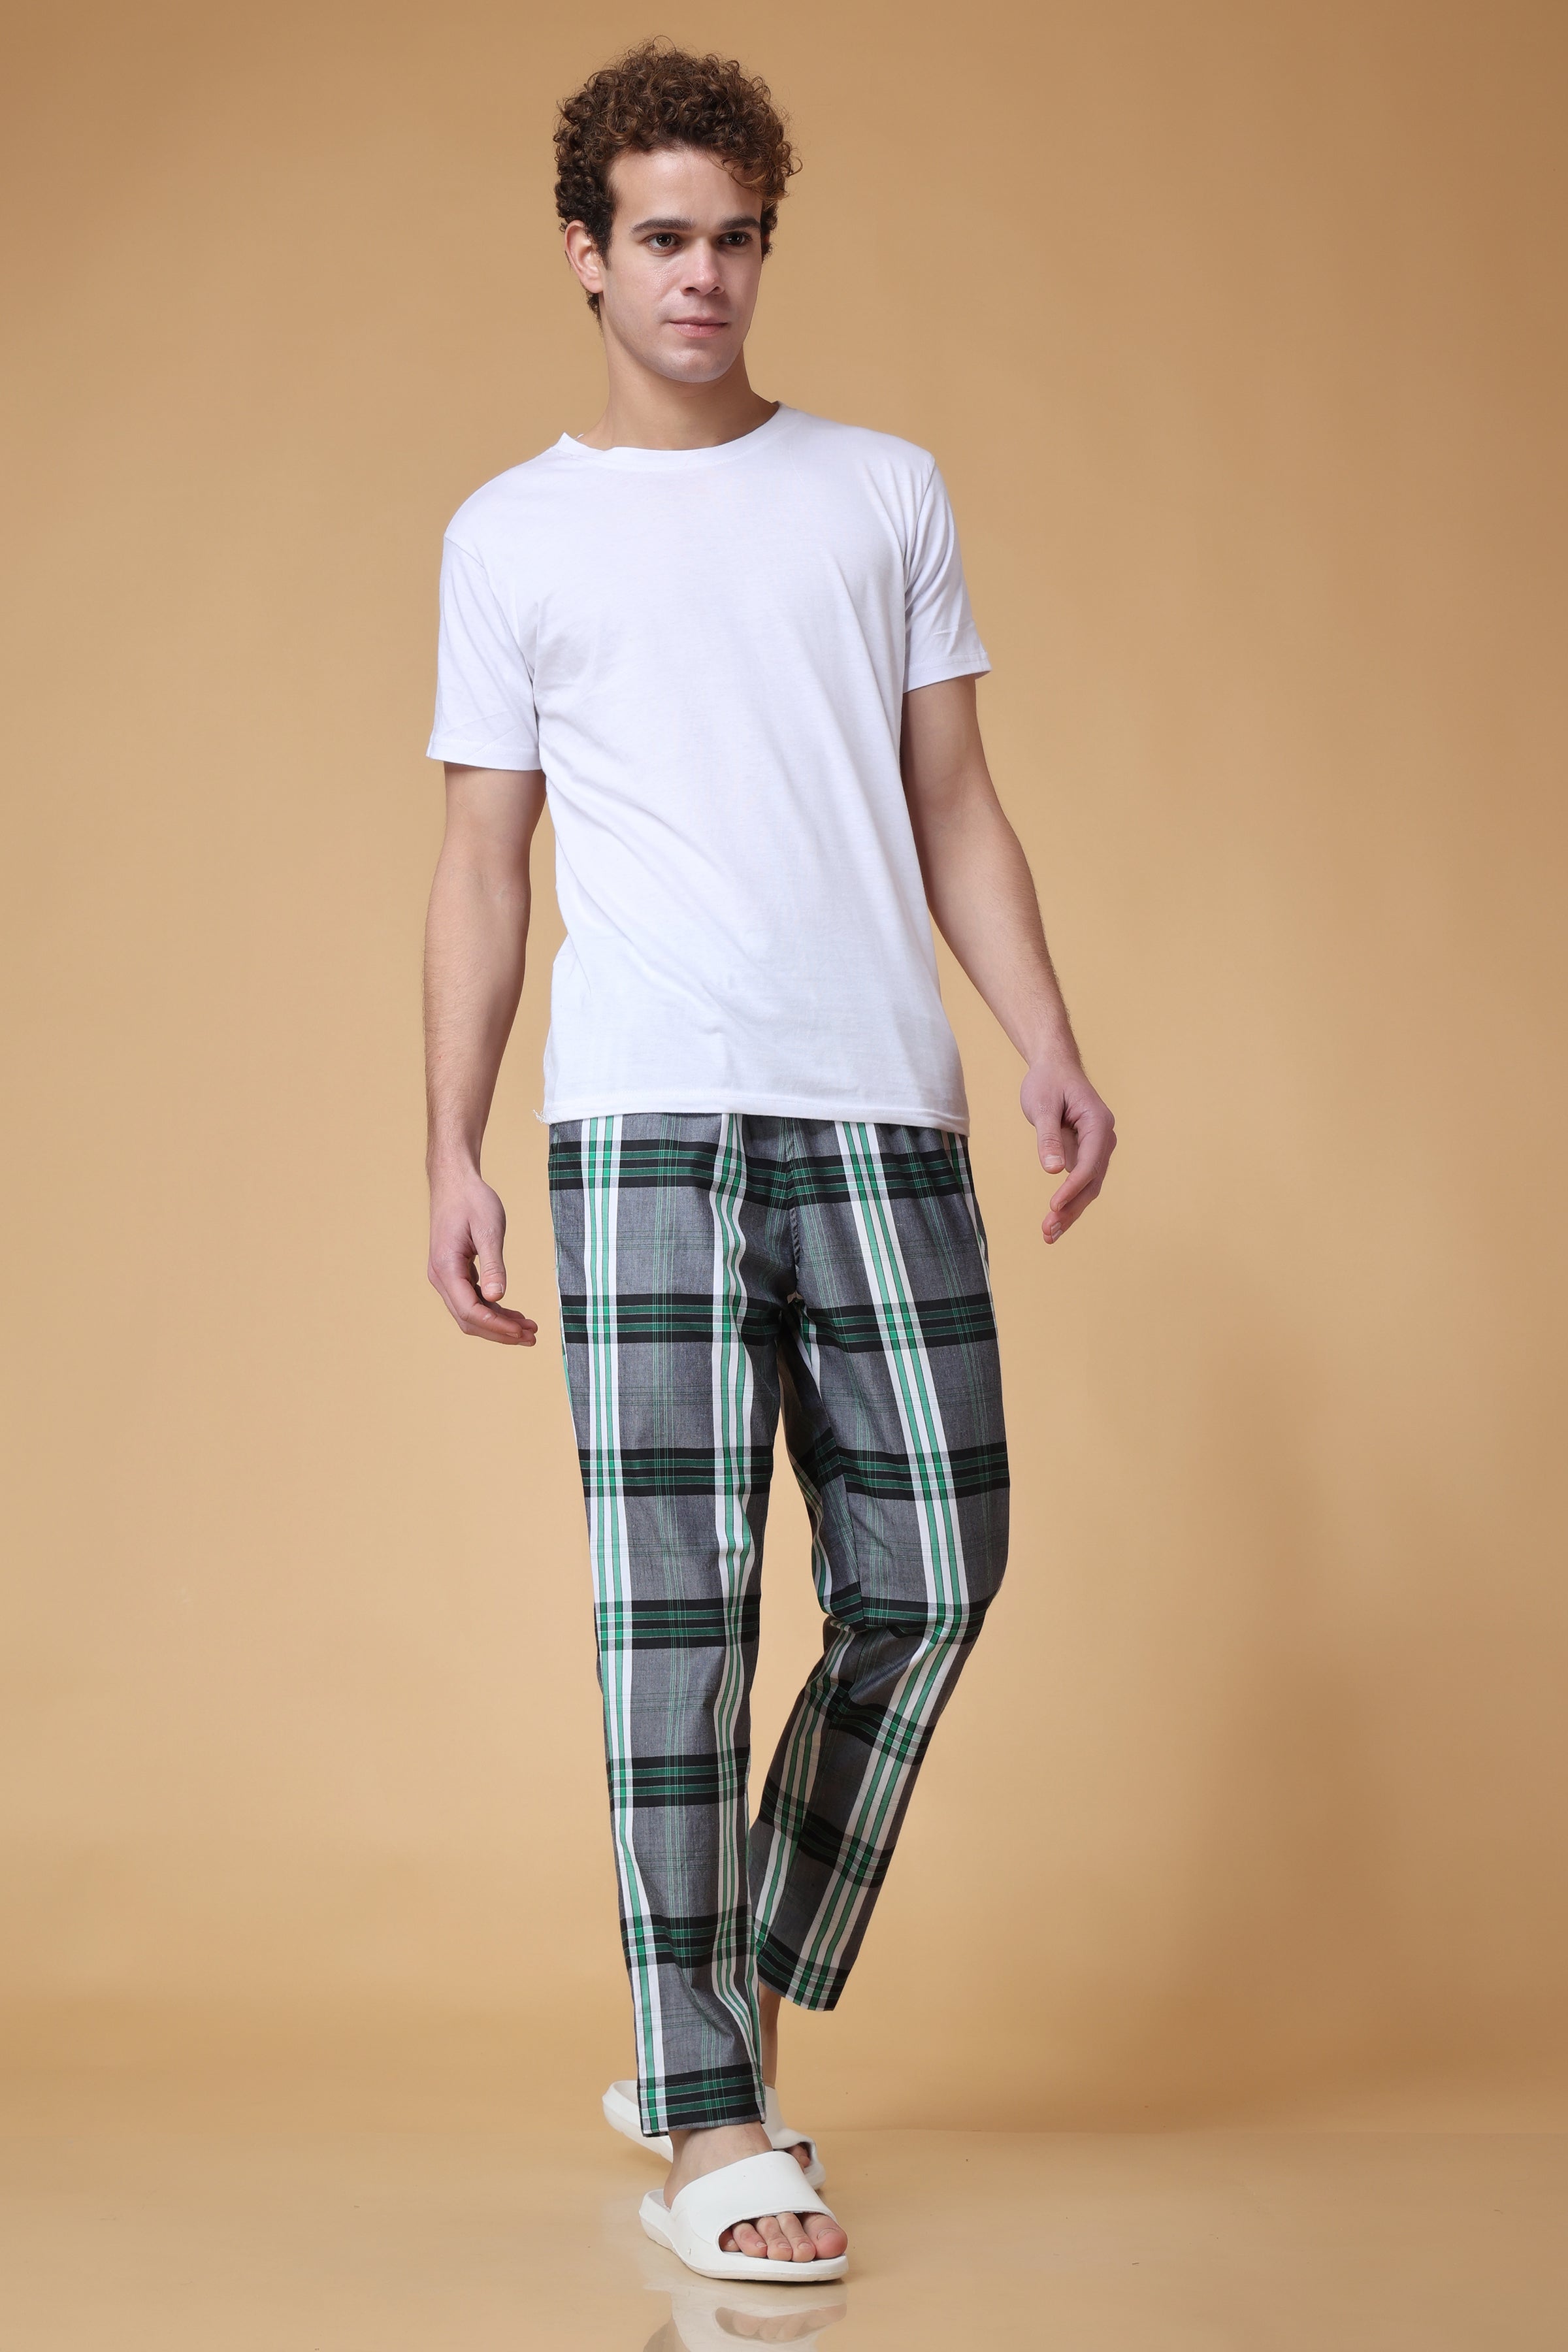 Plaid Pajama Pants for Tall Men  American Tall